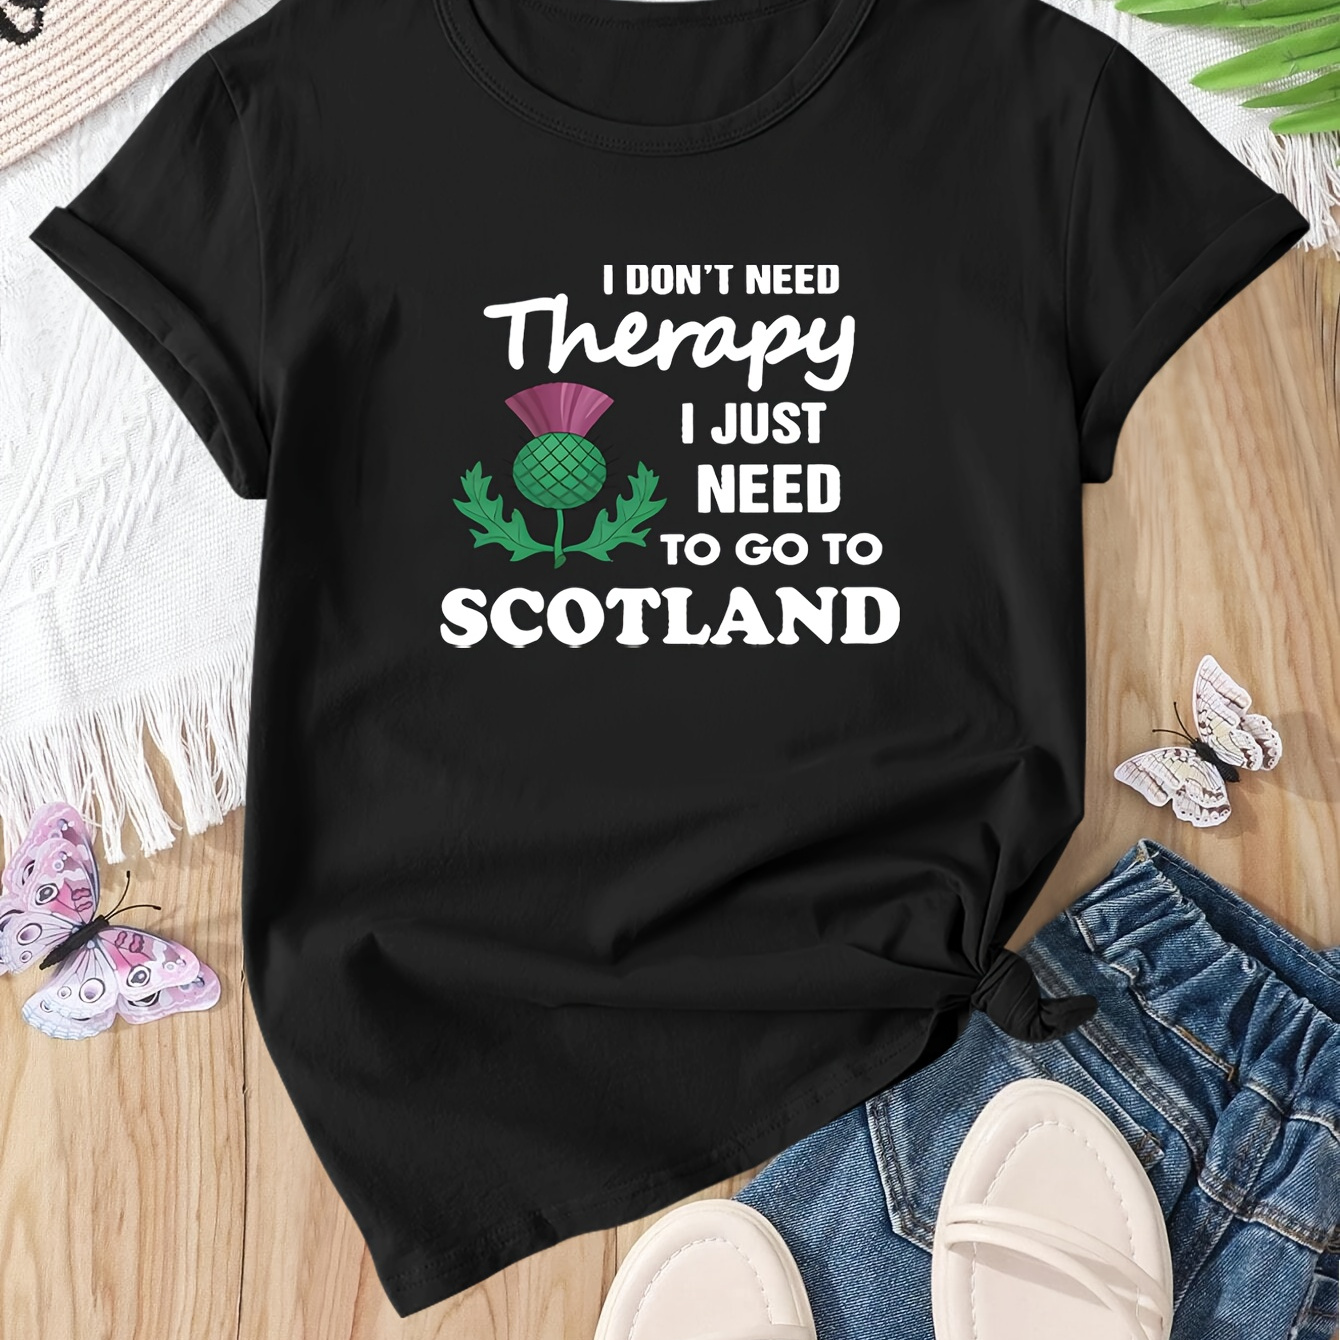 

Scotland Letter Print Round Neck Sports T-shirt, Short Sleeve Running Casual Top, Women's Activewear